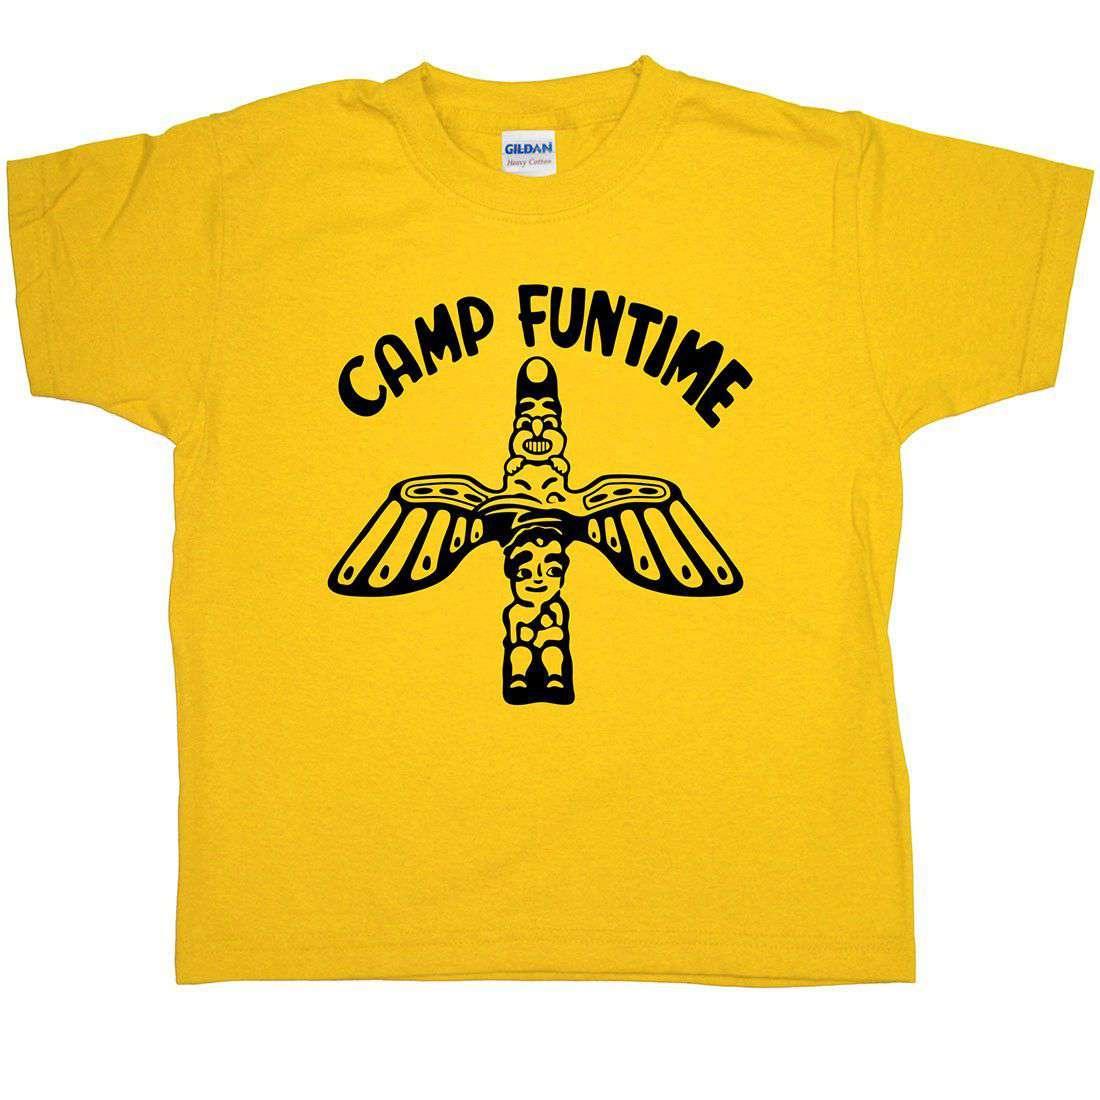 Camp Funtime Kids T-Shirt 8Ball